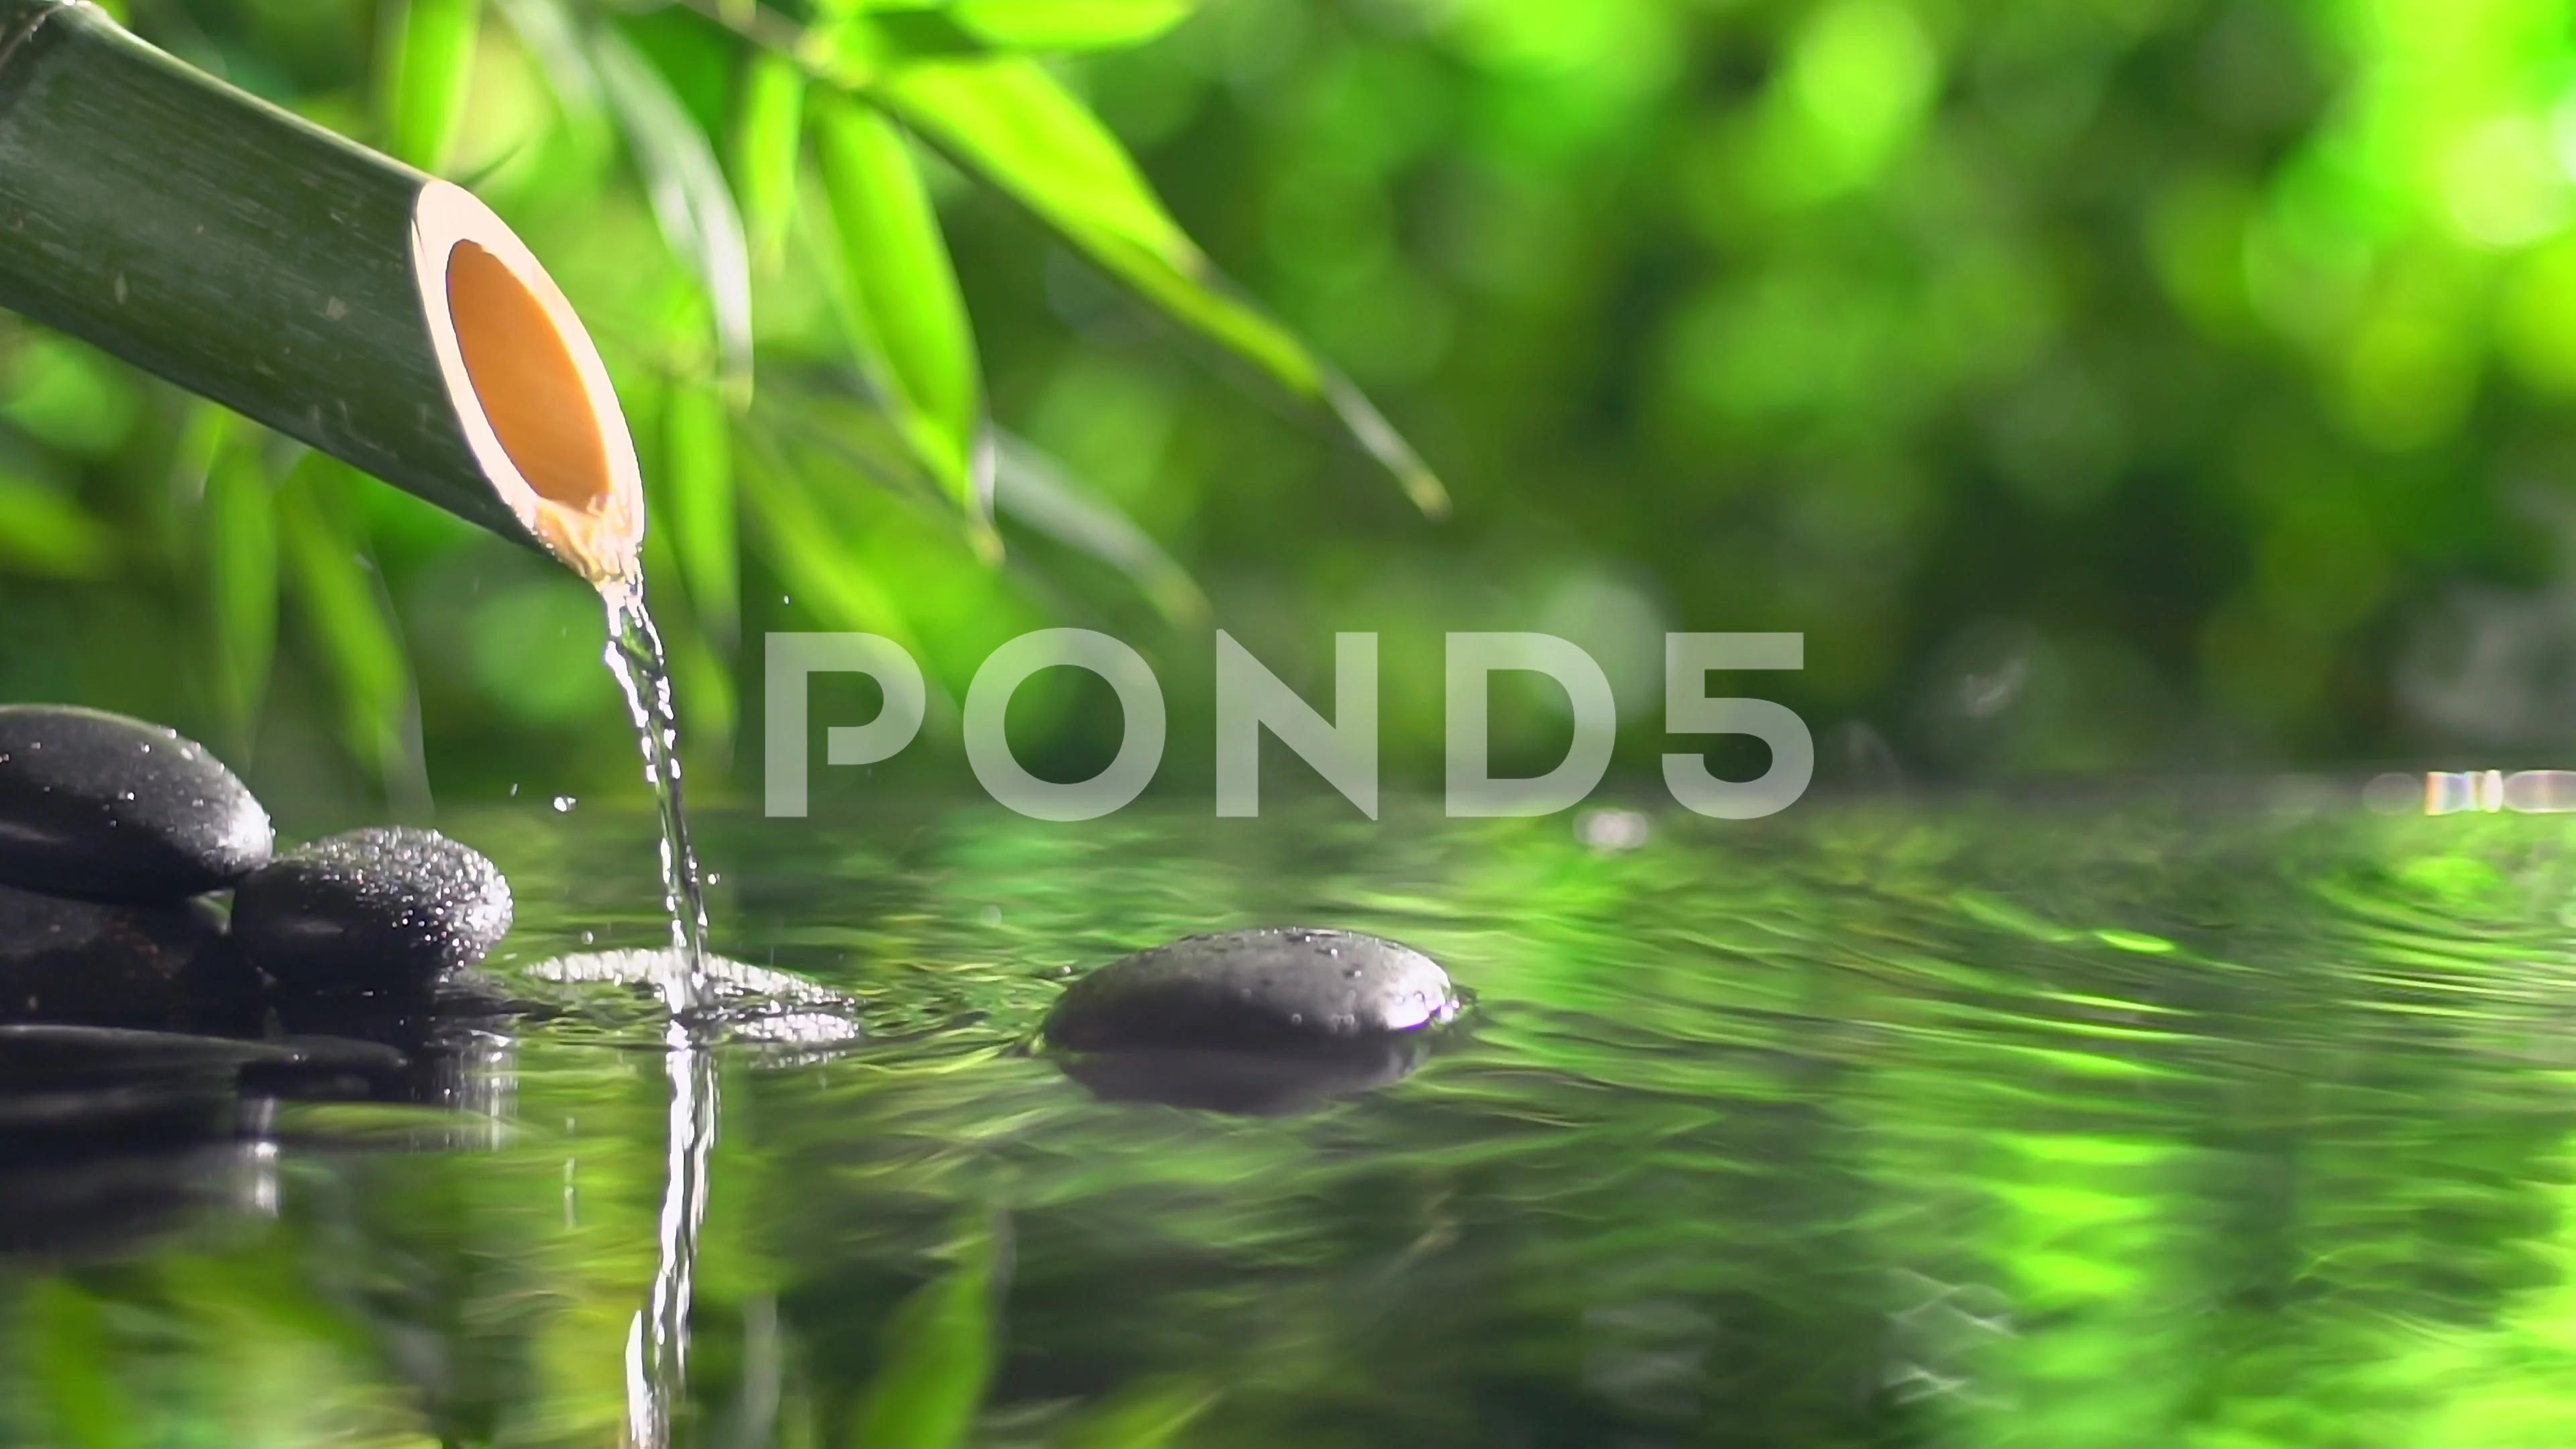 Zen stones with bamboo and water loop, Stock Video